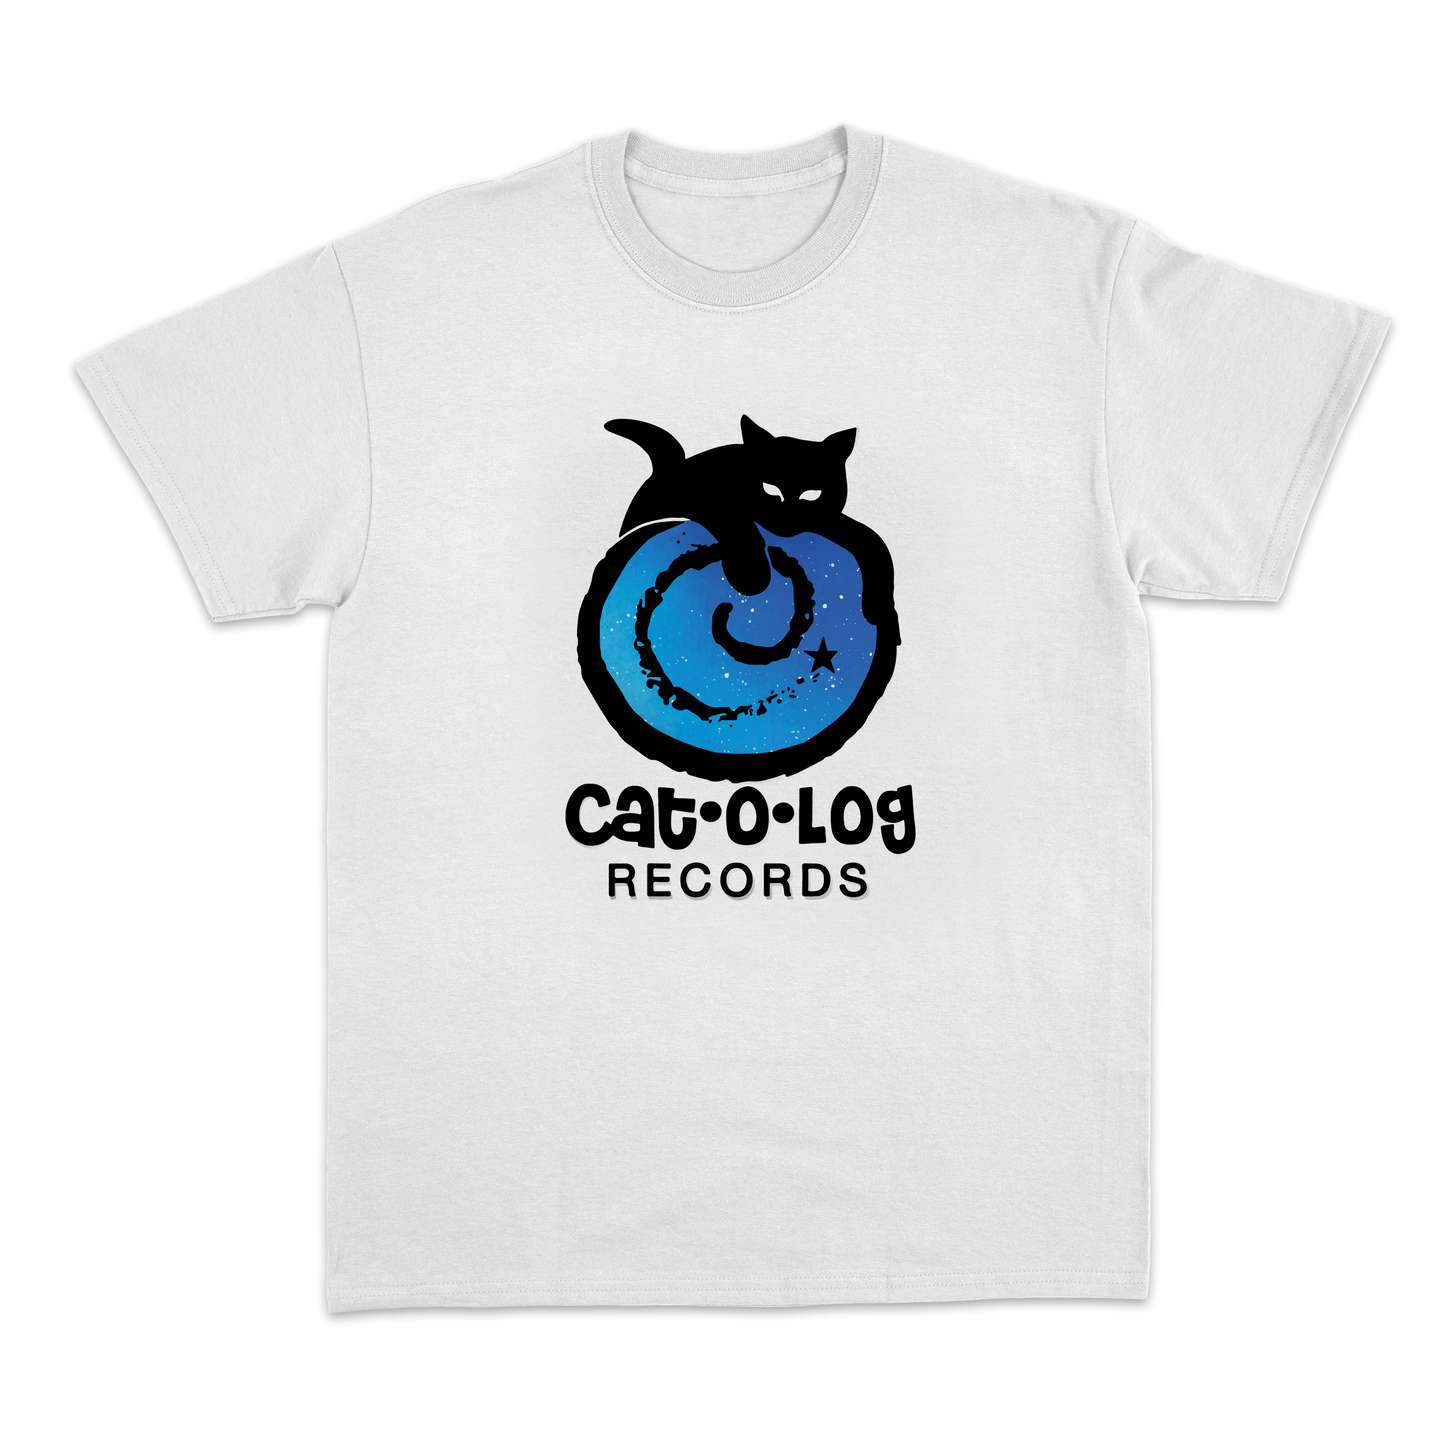 Cat-O-Log Records T-shirt